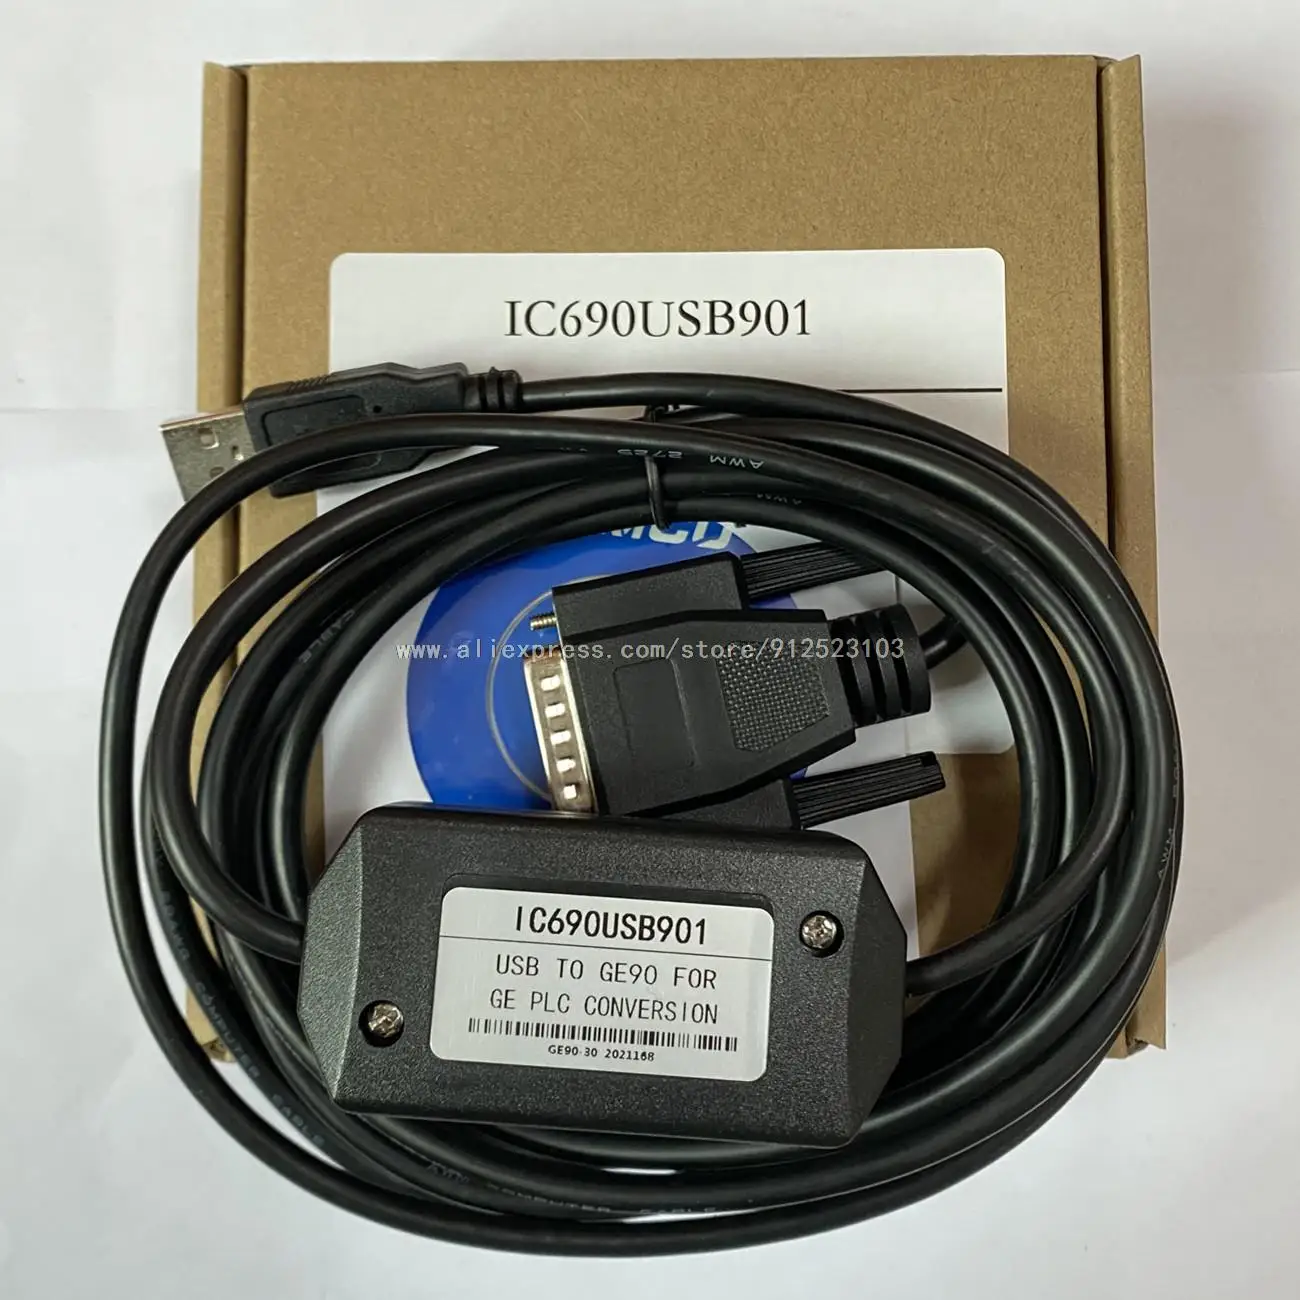 1шт Кабель для программирования IC690USB901 для GE Fanuc SNP GE90-70/90-30 Серии PLC/кабель для связи/загрузки IC690USB90